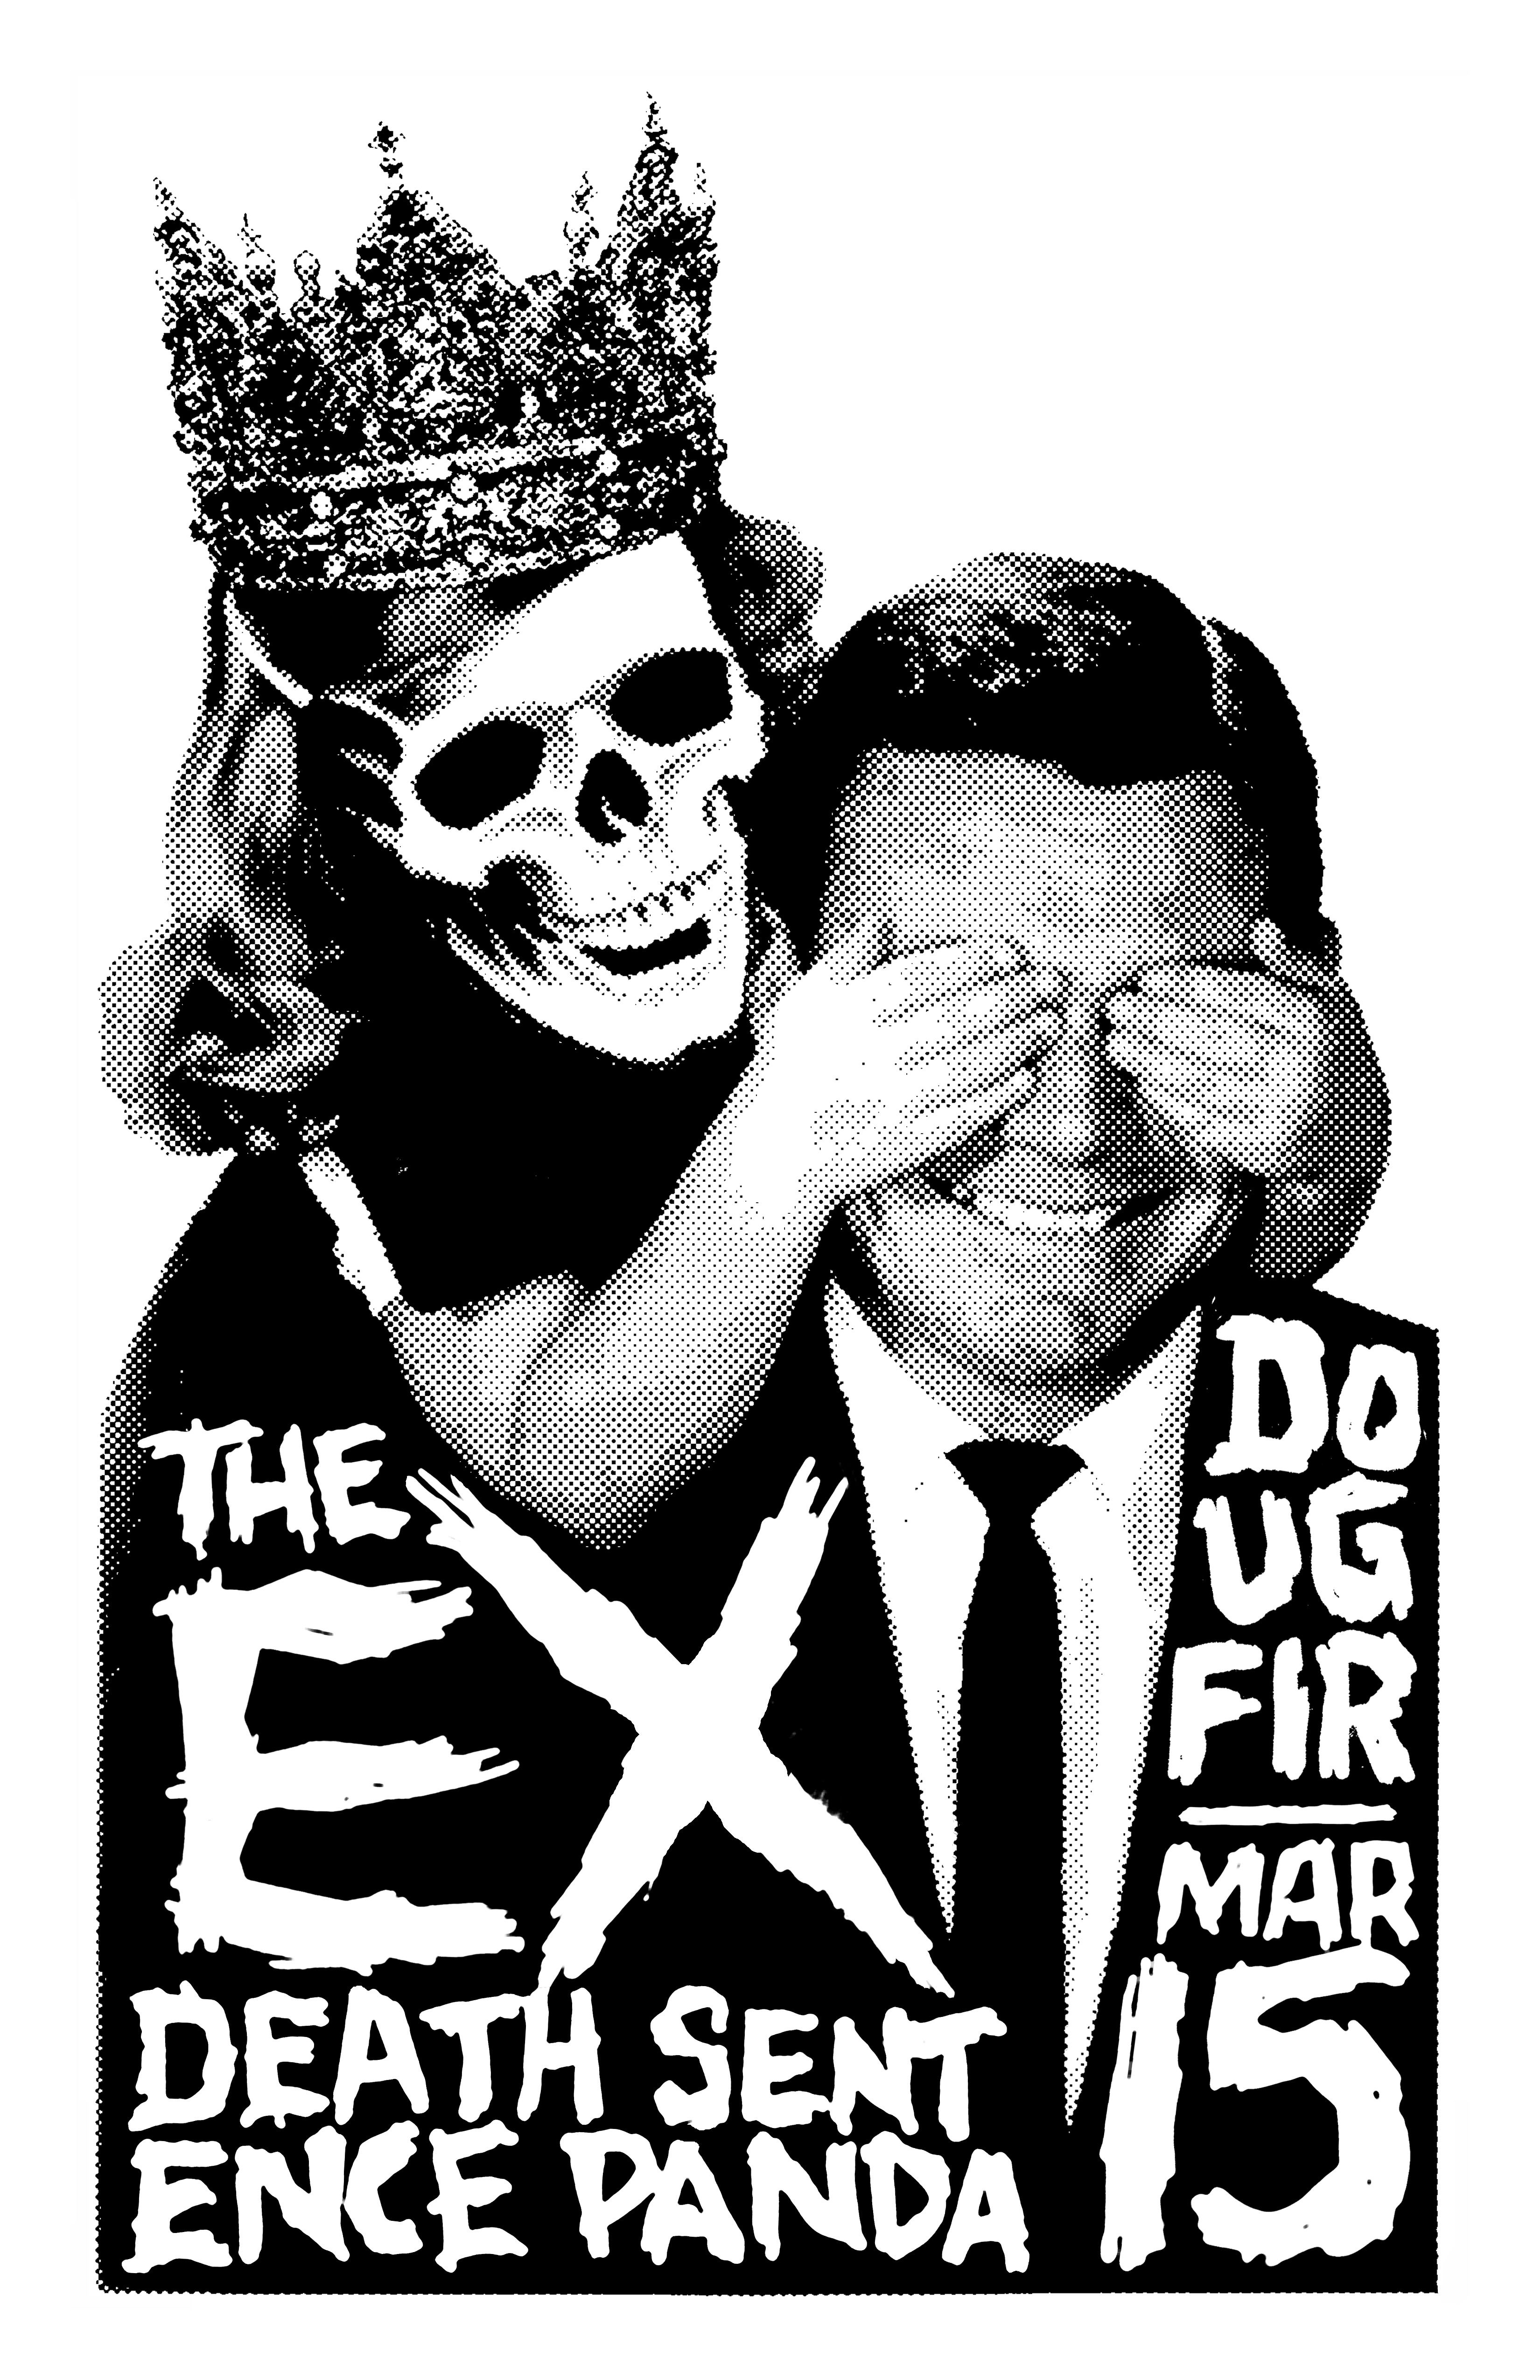 MXP-140.7 Ex 2011 Doug Fir  Mar 15 Concert Poster